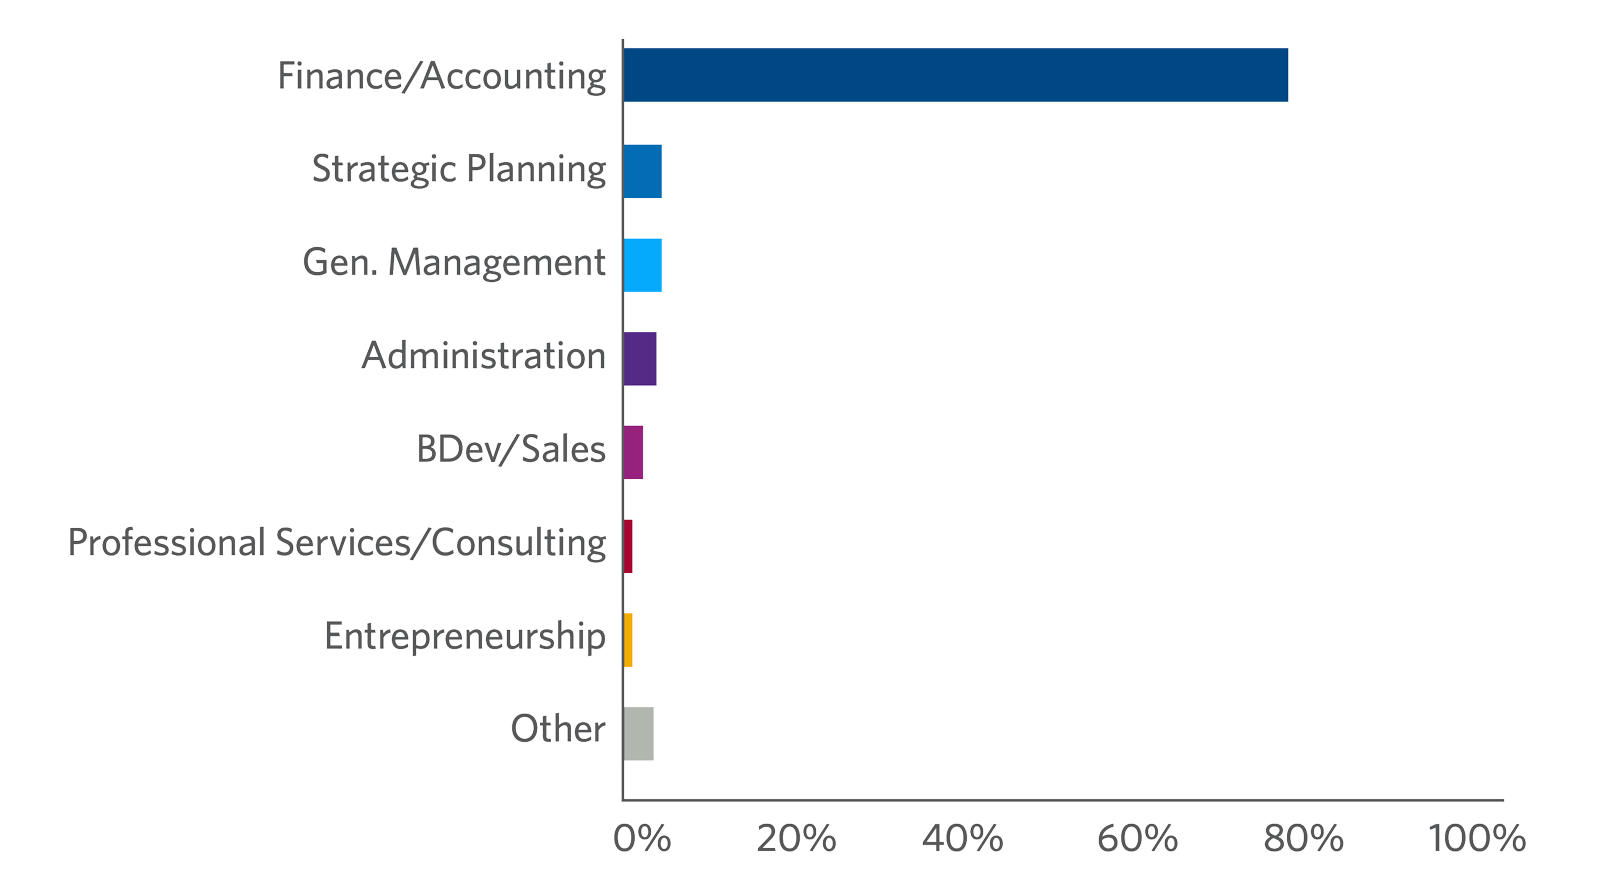 The CFO participants by job function